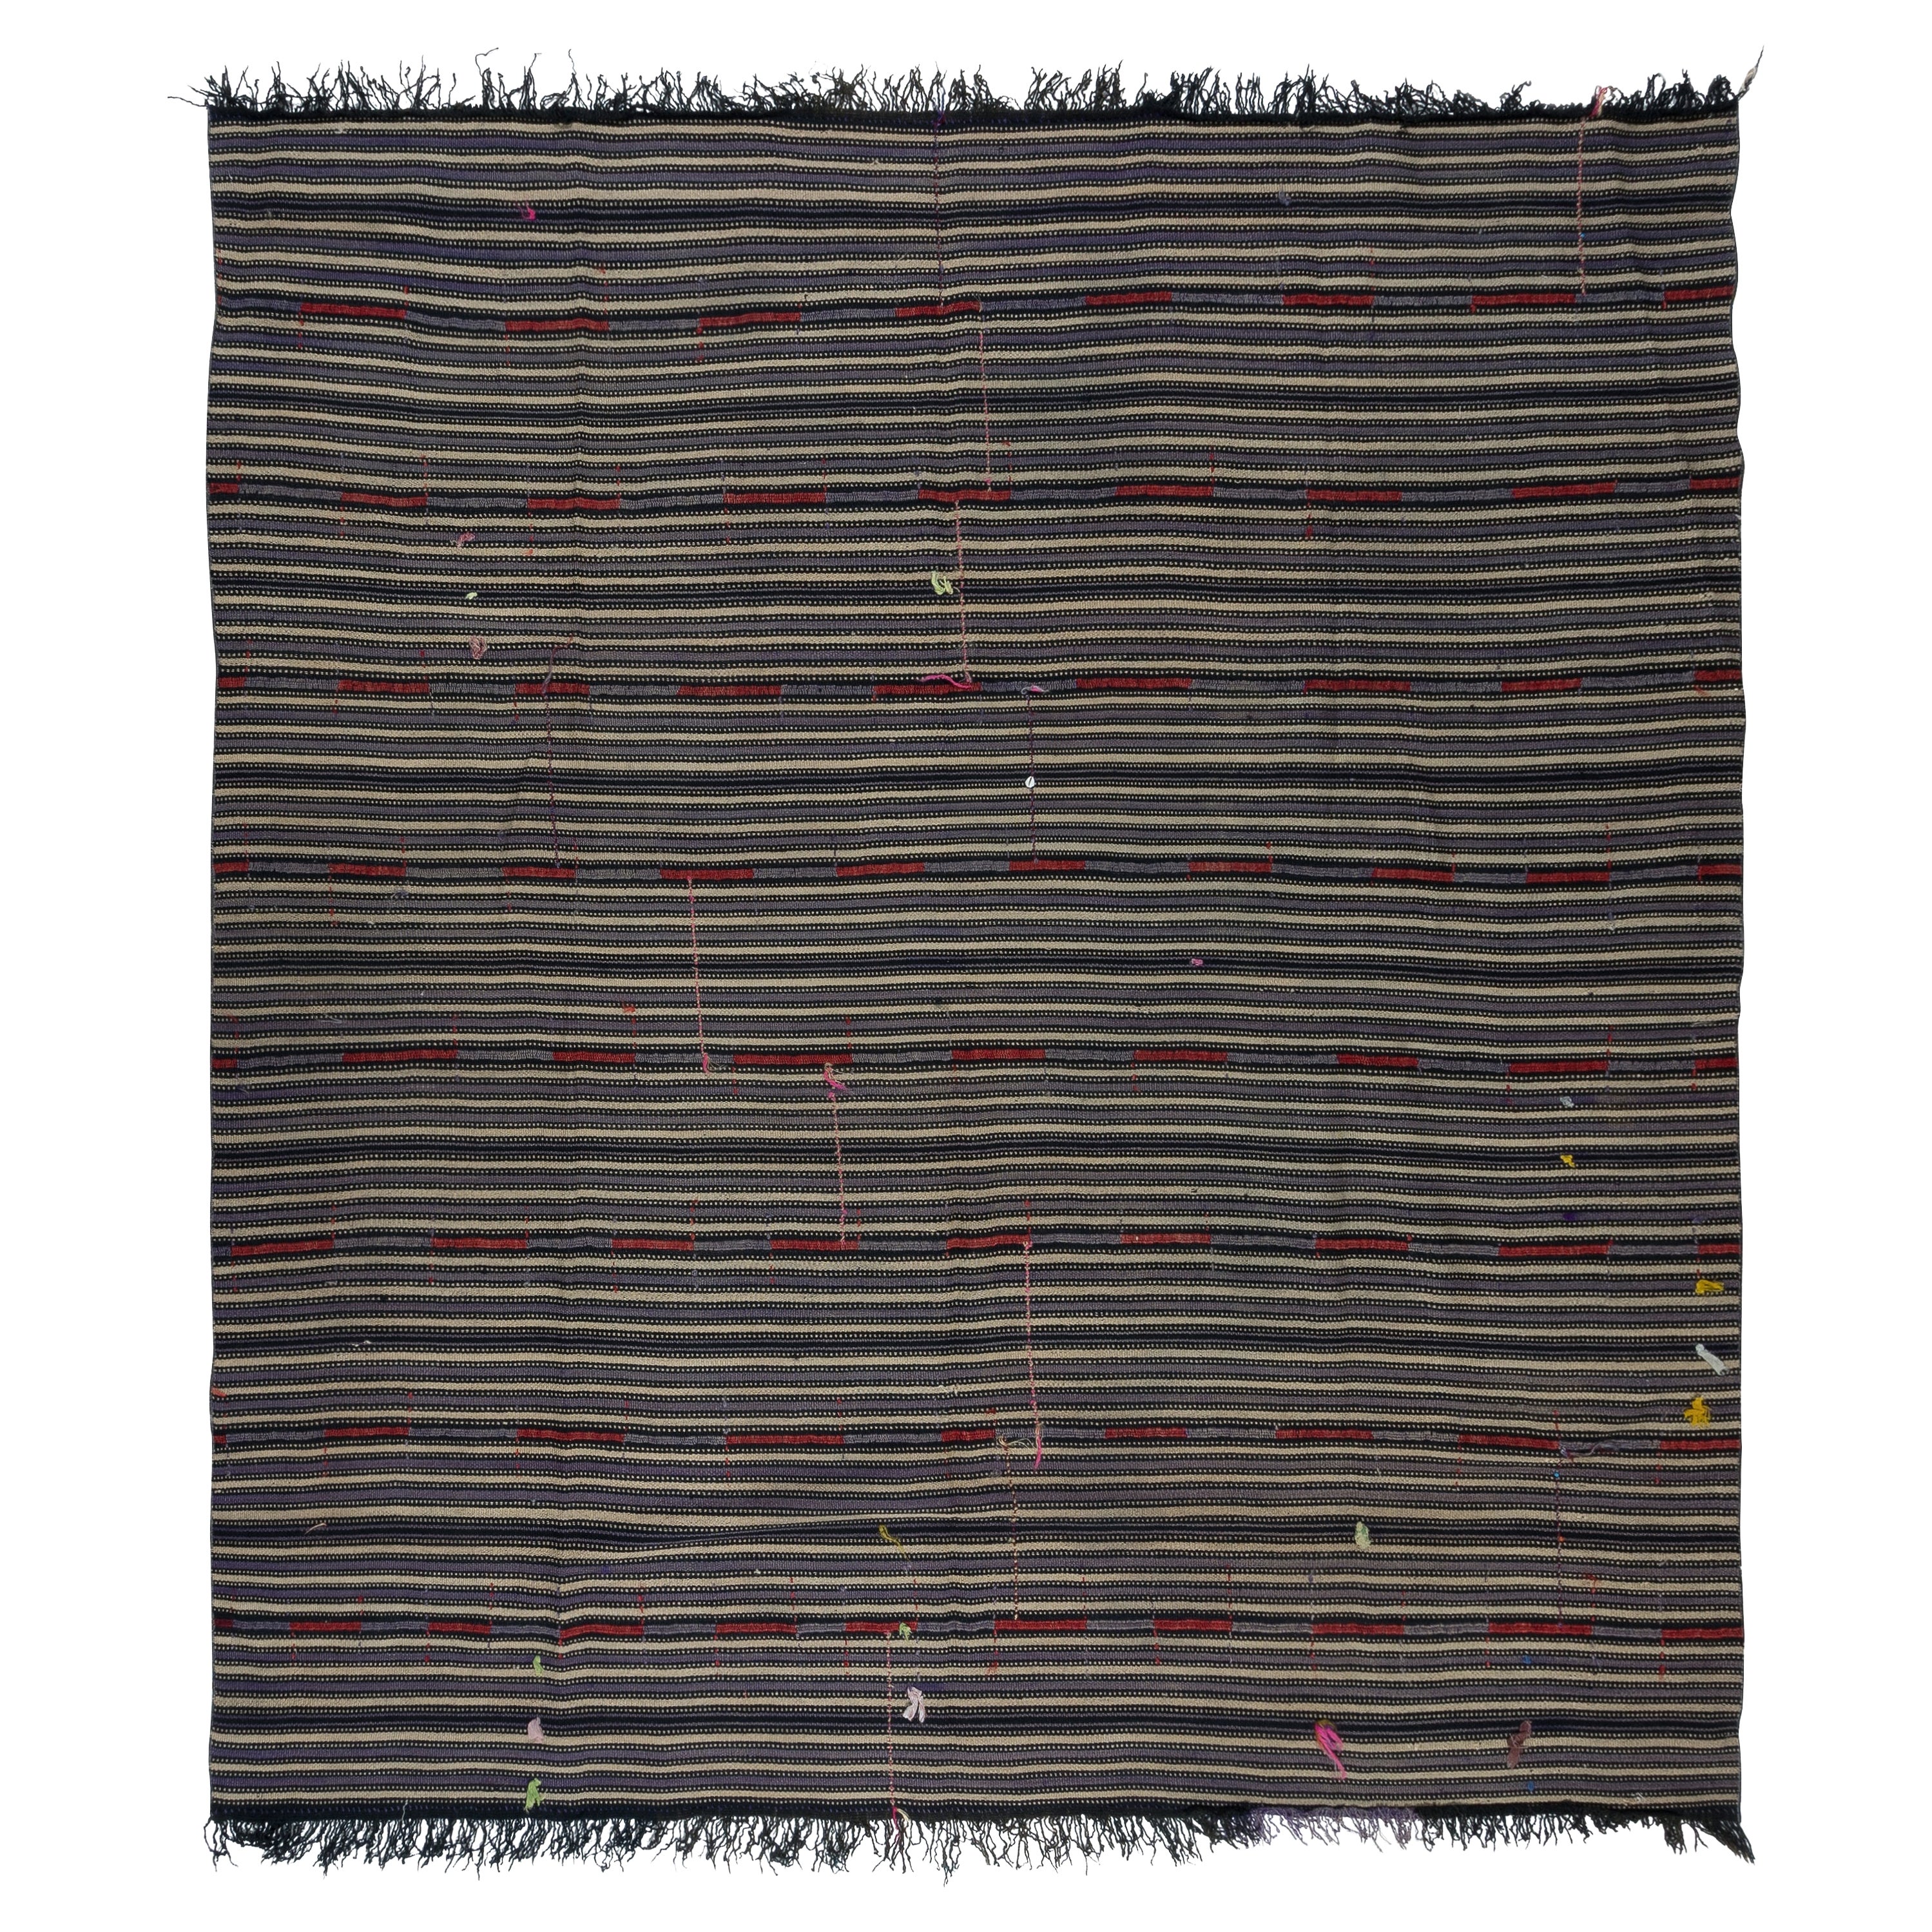 7.2x7.8 Ft Unique Hand-Woven Striped Kilim, Vintage Flat-Weave Anatolian Rug For Sale